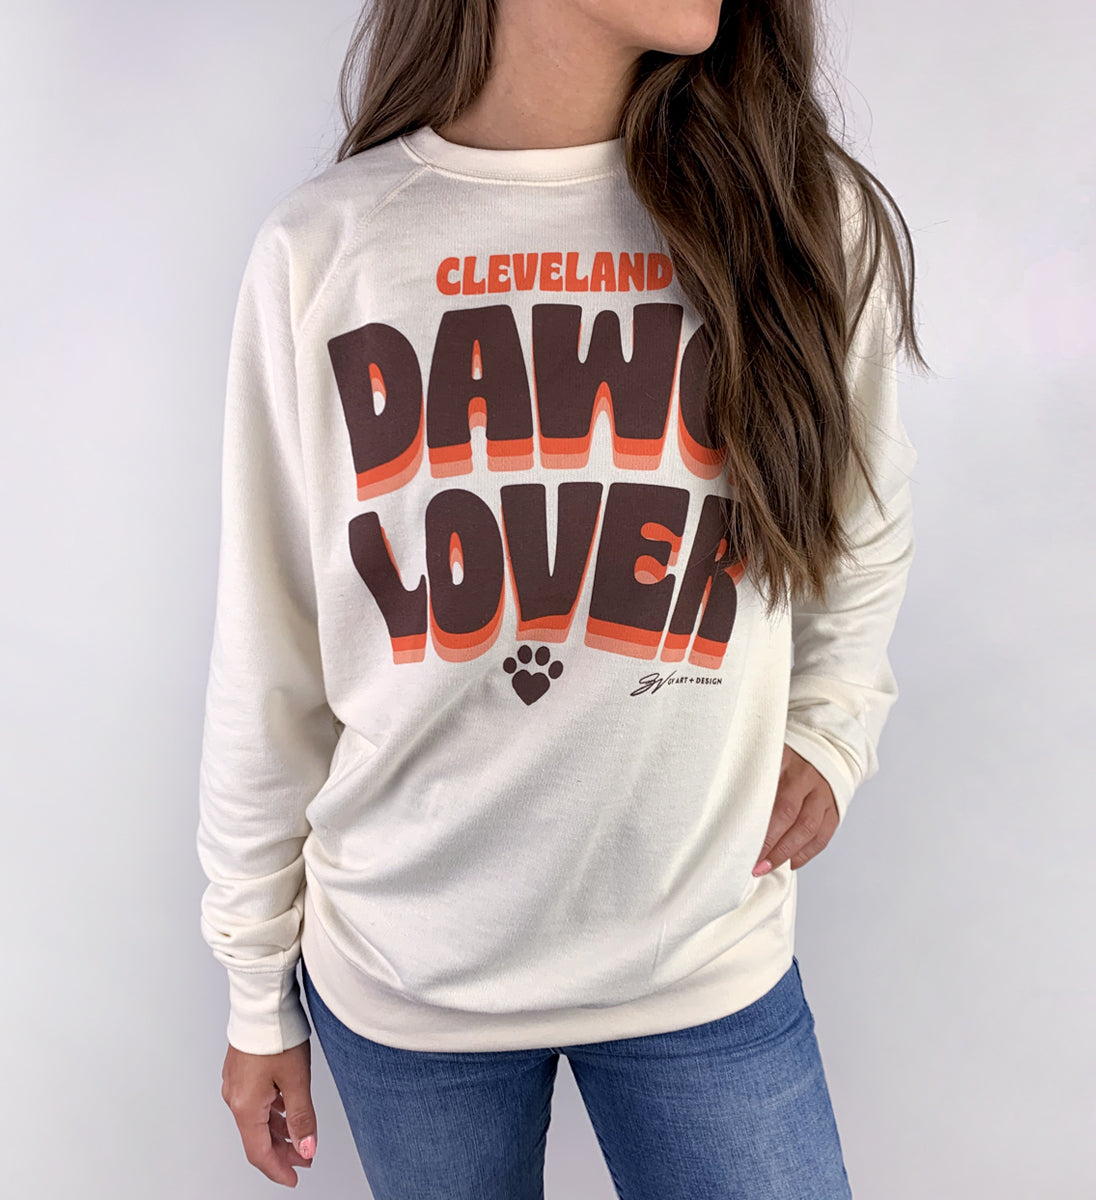 Cleveland Football Dawg Lover Crew Sweatshirt